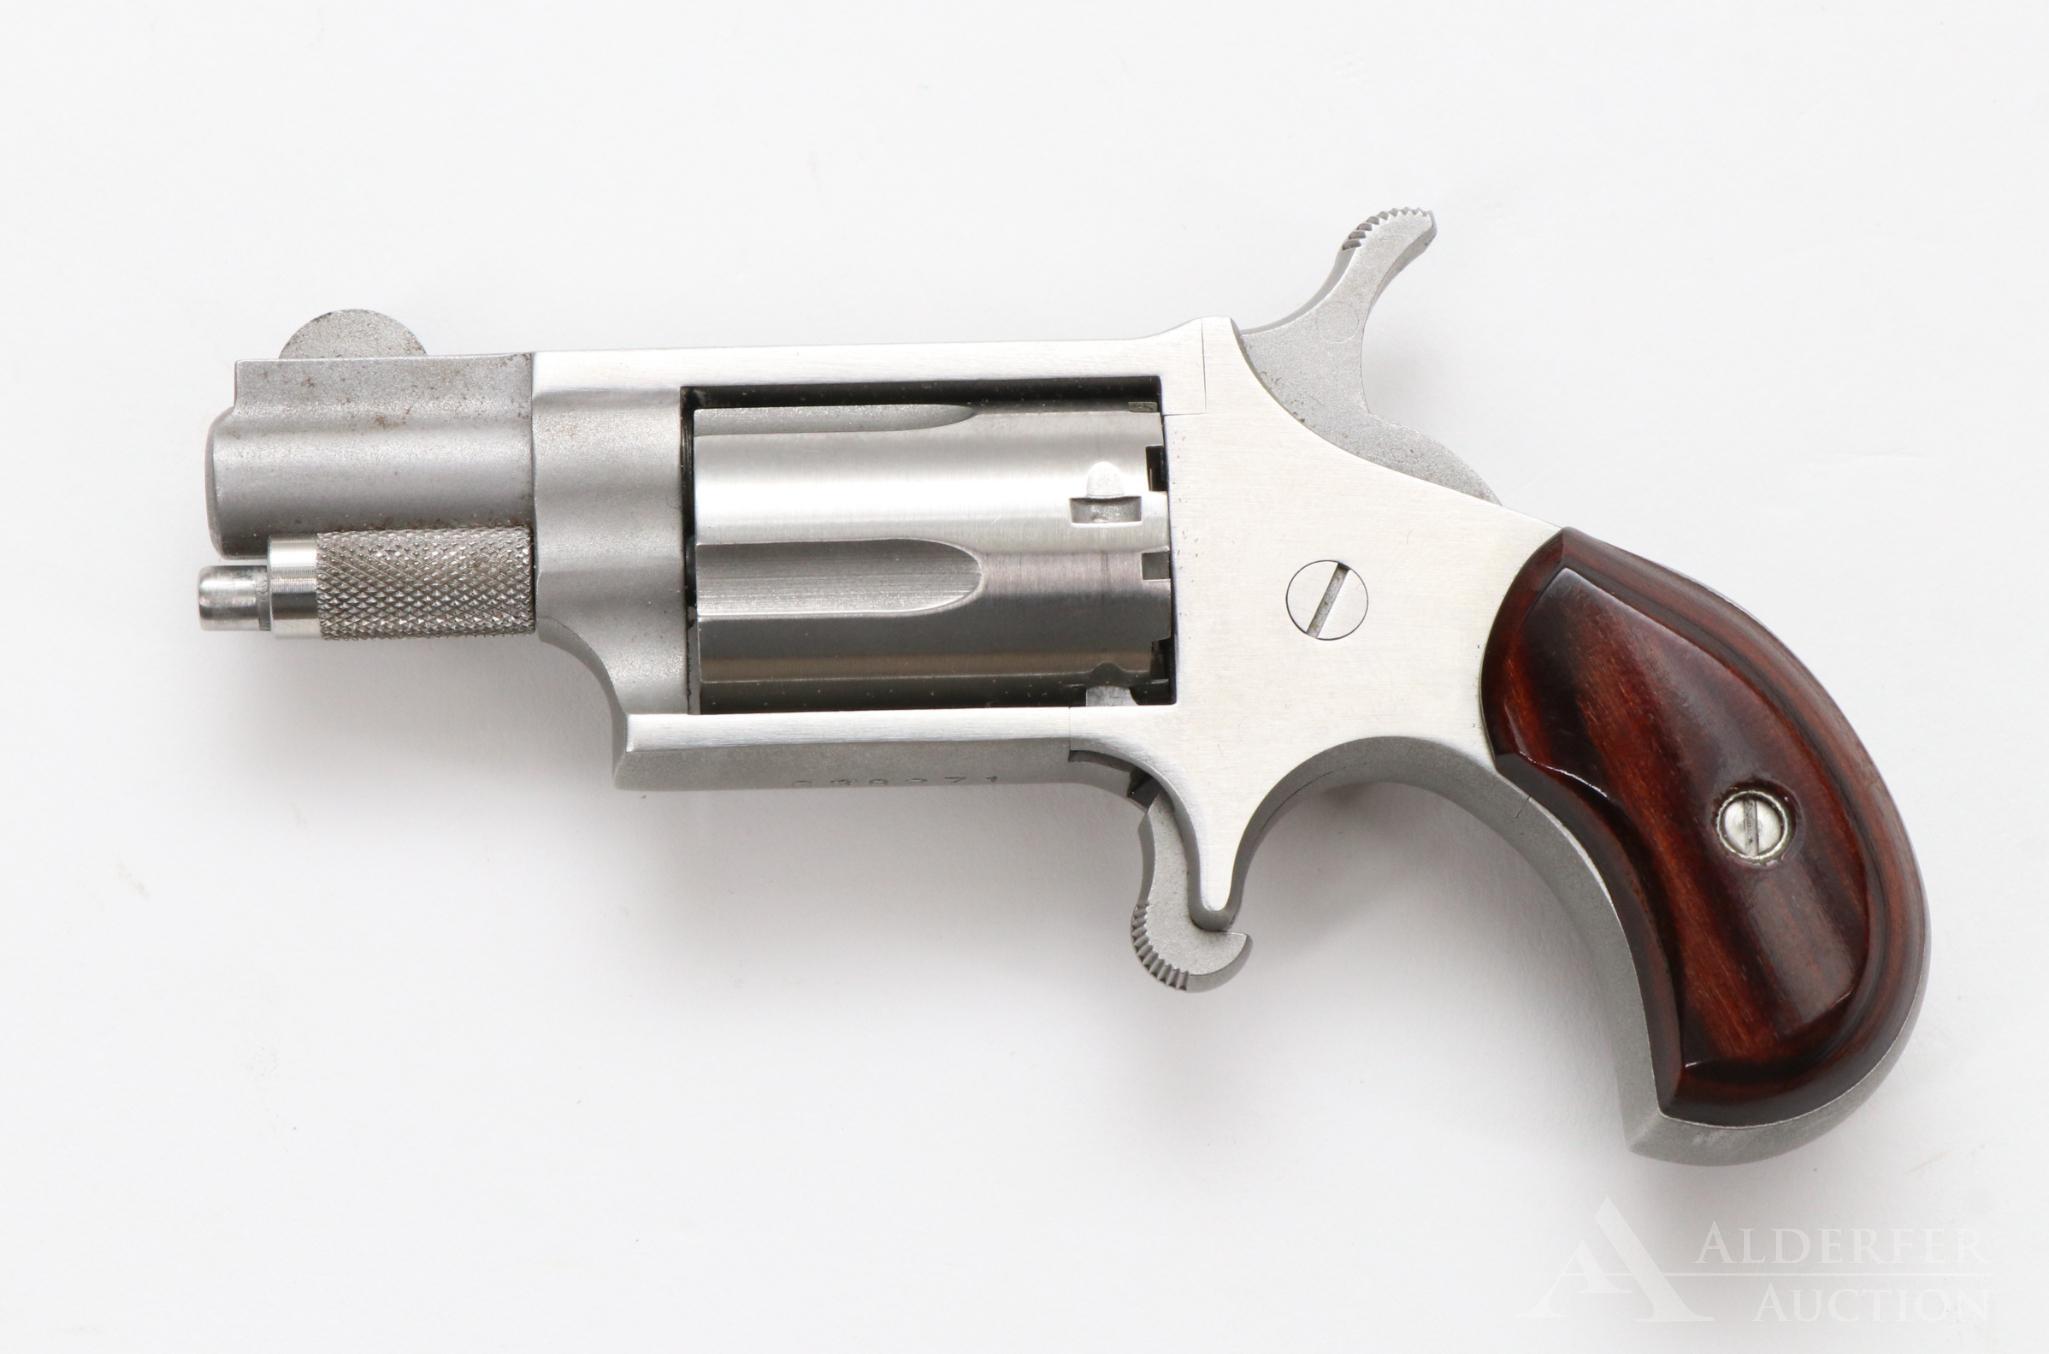 North American Arms NAA22LR Revolver